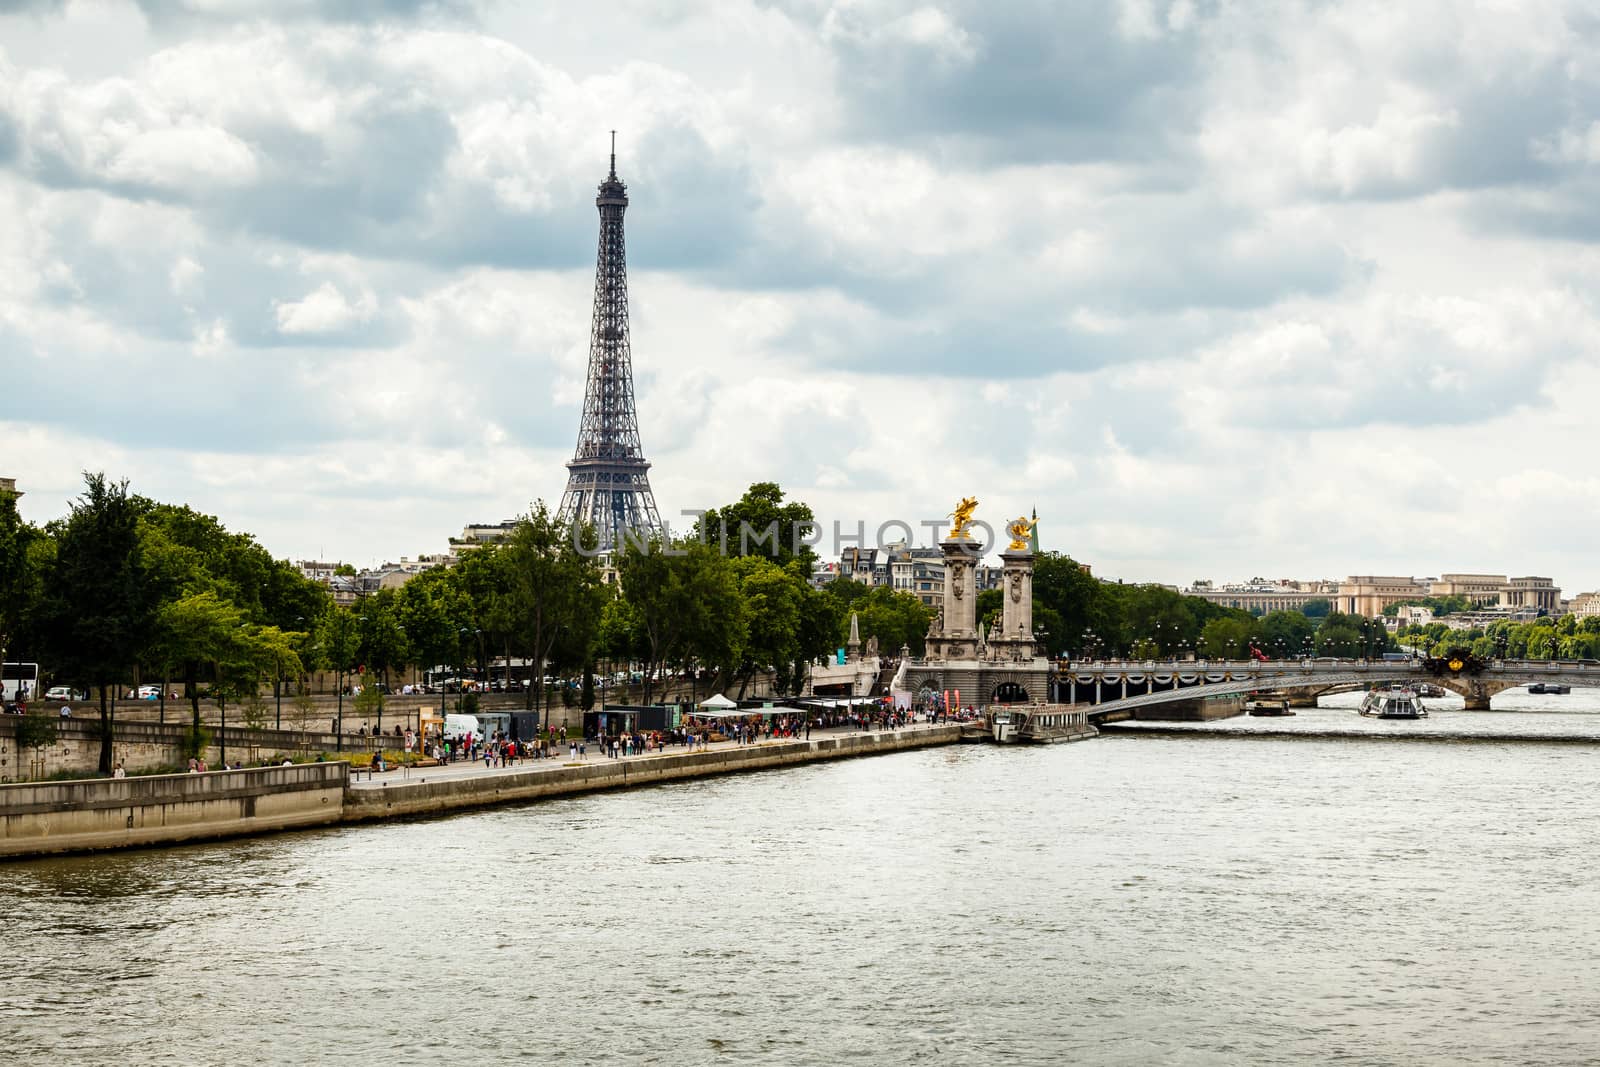 Eiffel Tower and Alexander the Third Bridge, Paris, France by anshar